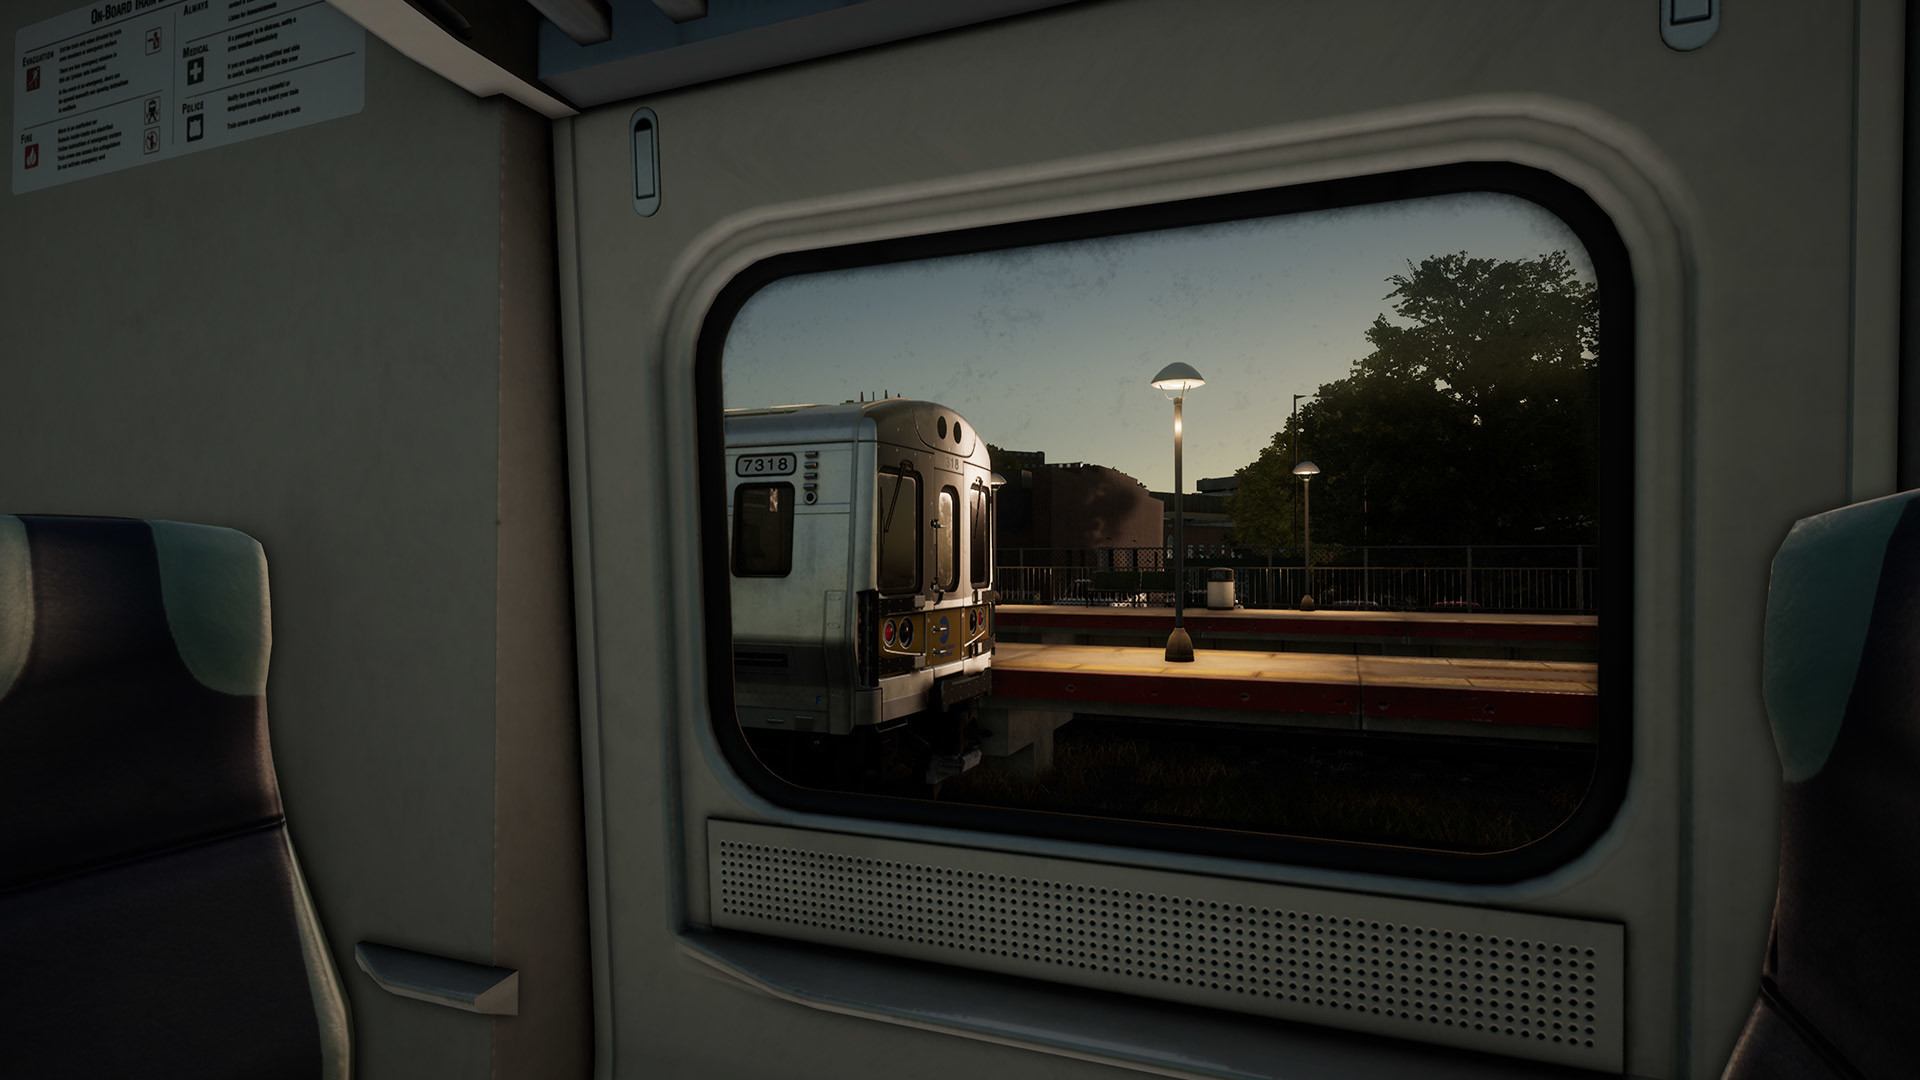 Train Sim World 2: Long Island Rail Road: New York - Hicksville Route Add-On DLC Steam CD Key USD 5.63